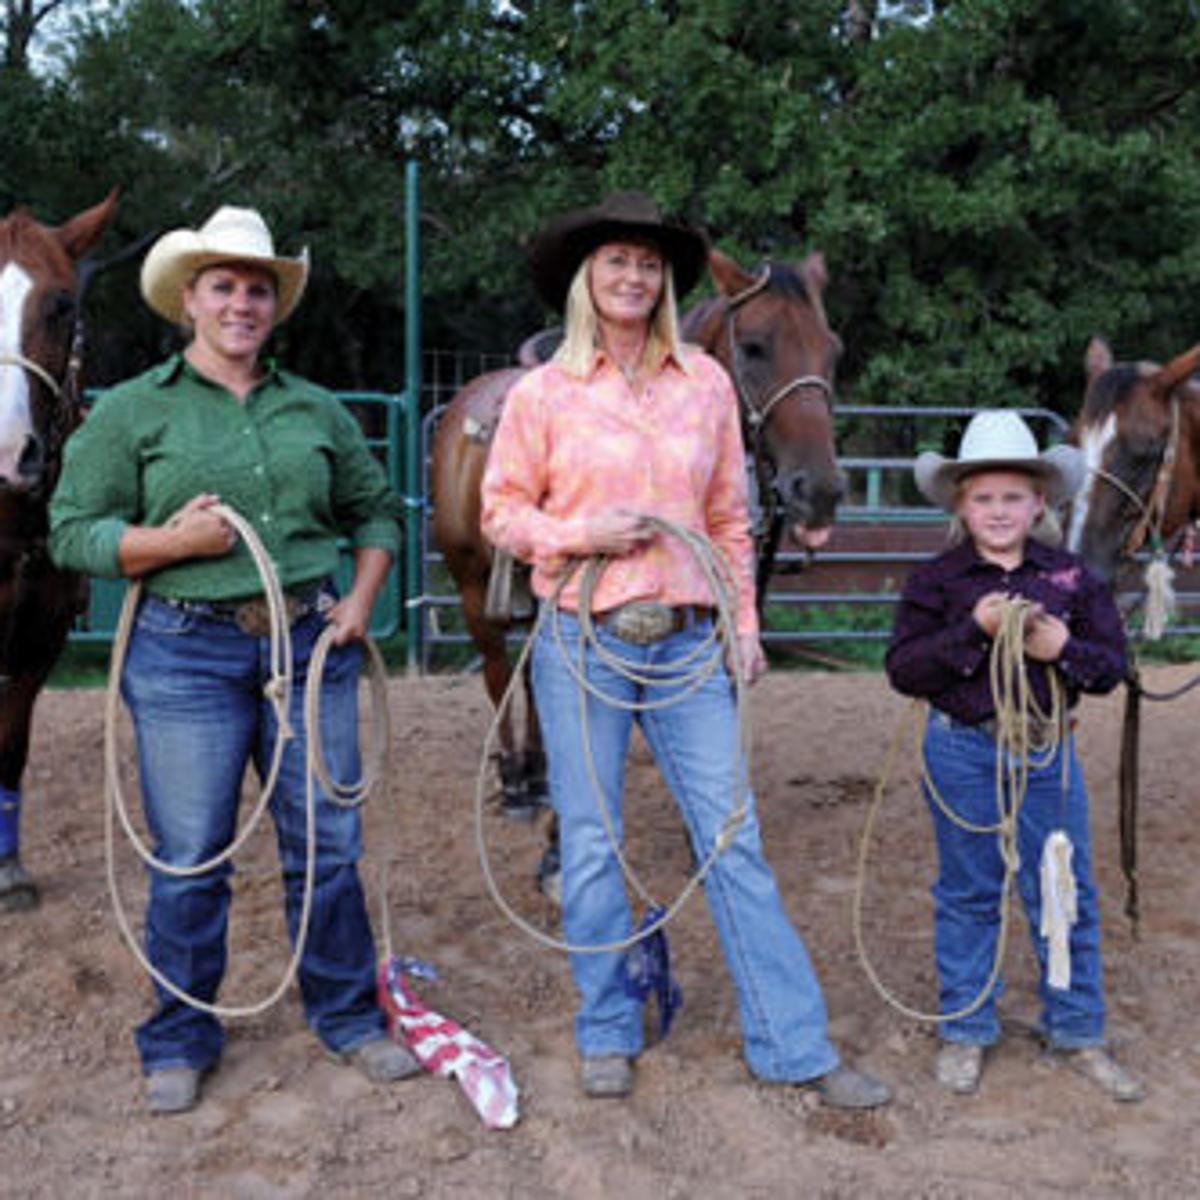 Women of rodeo: Roping